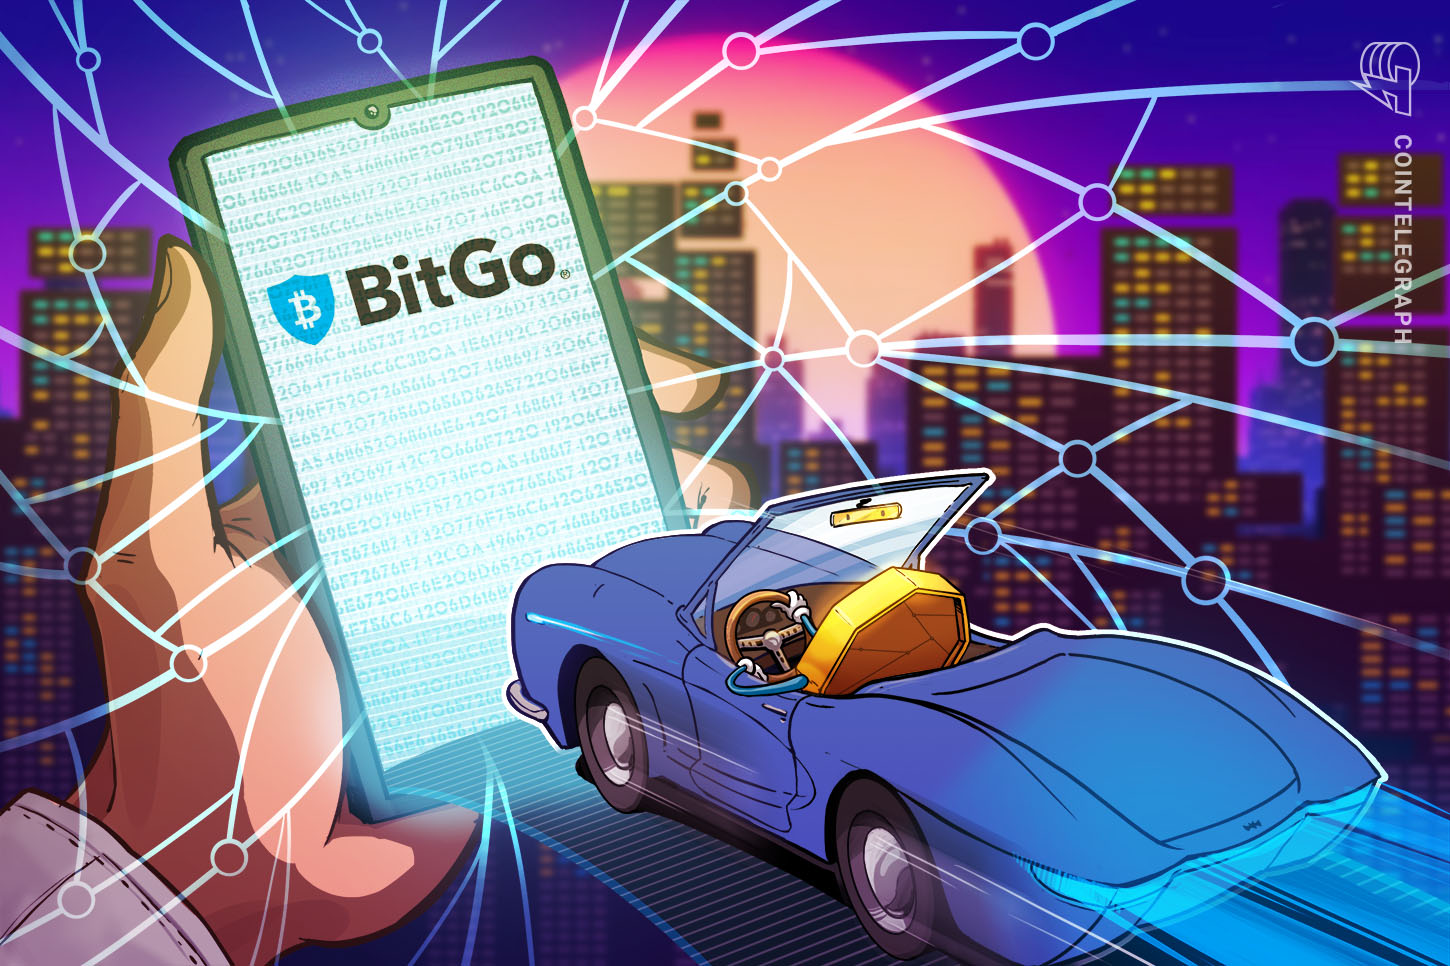 BitGo property hit $16 billion as institutional adoption grows